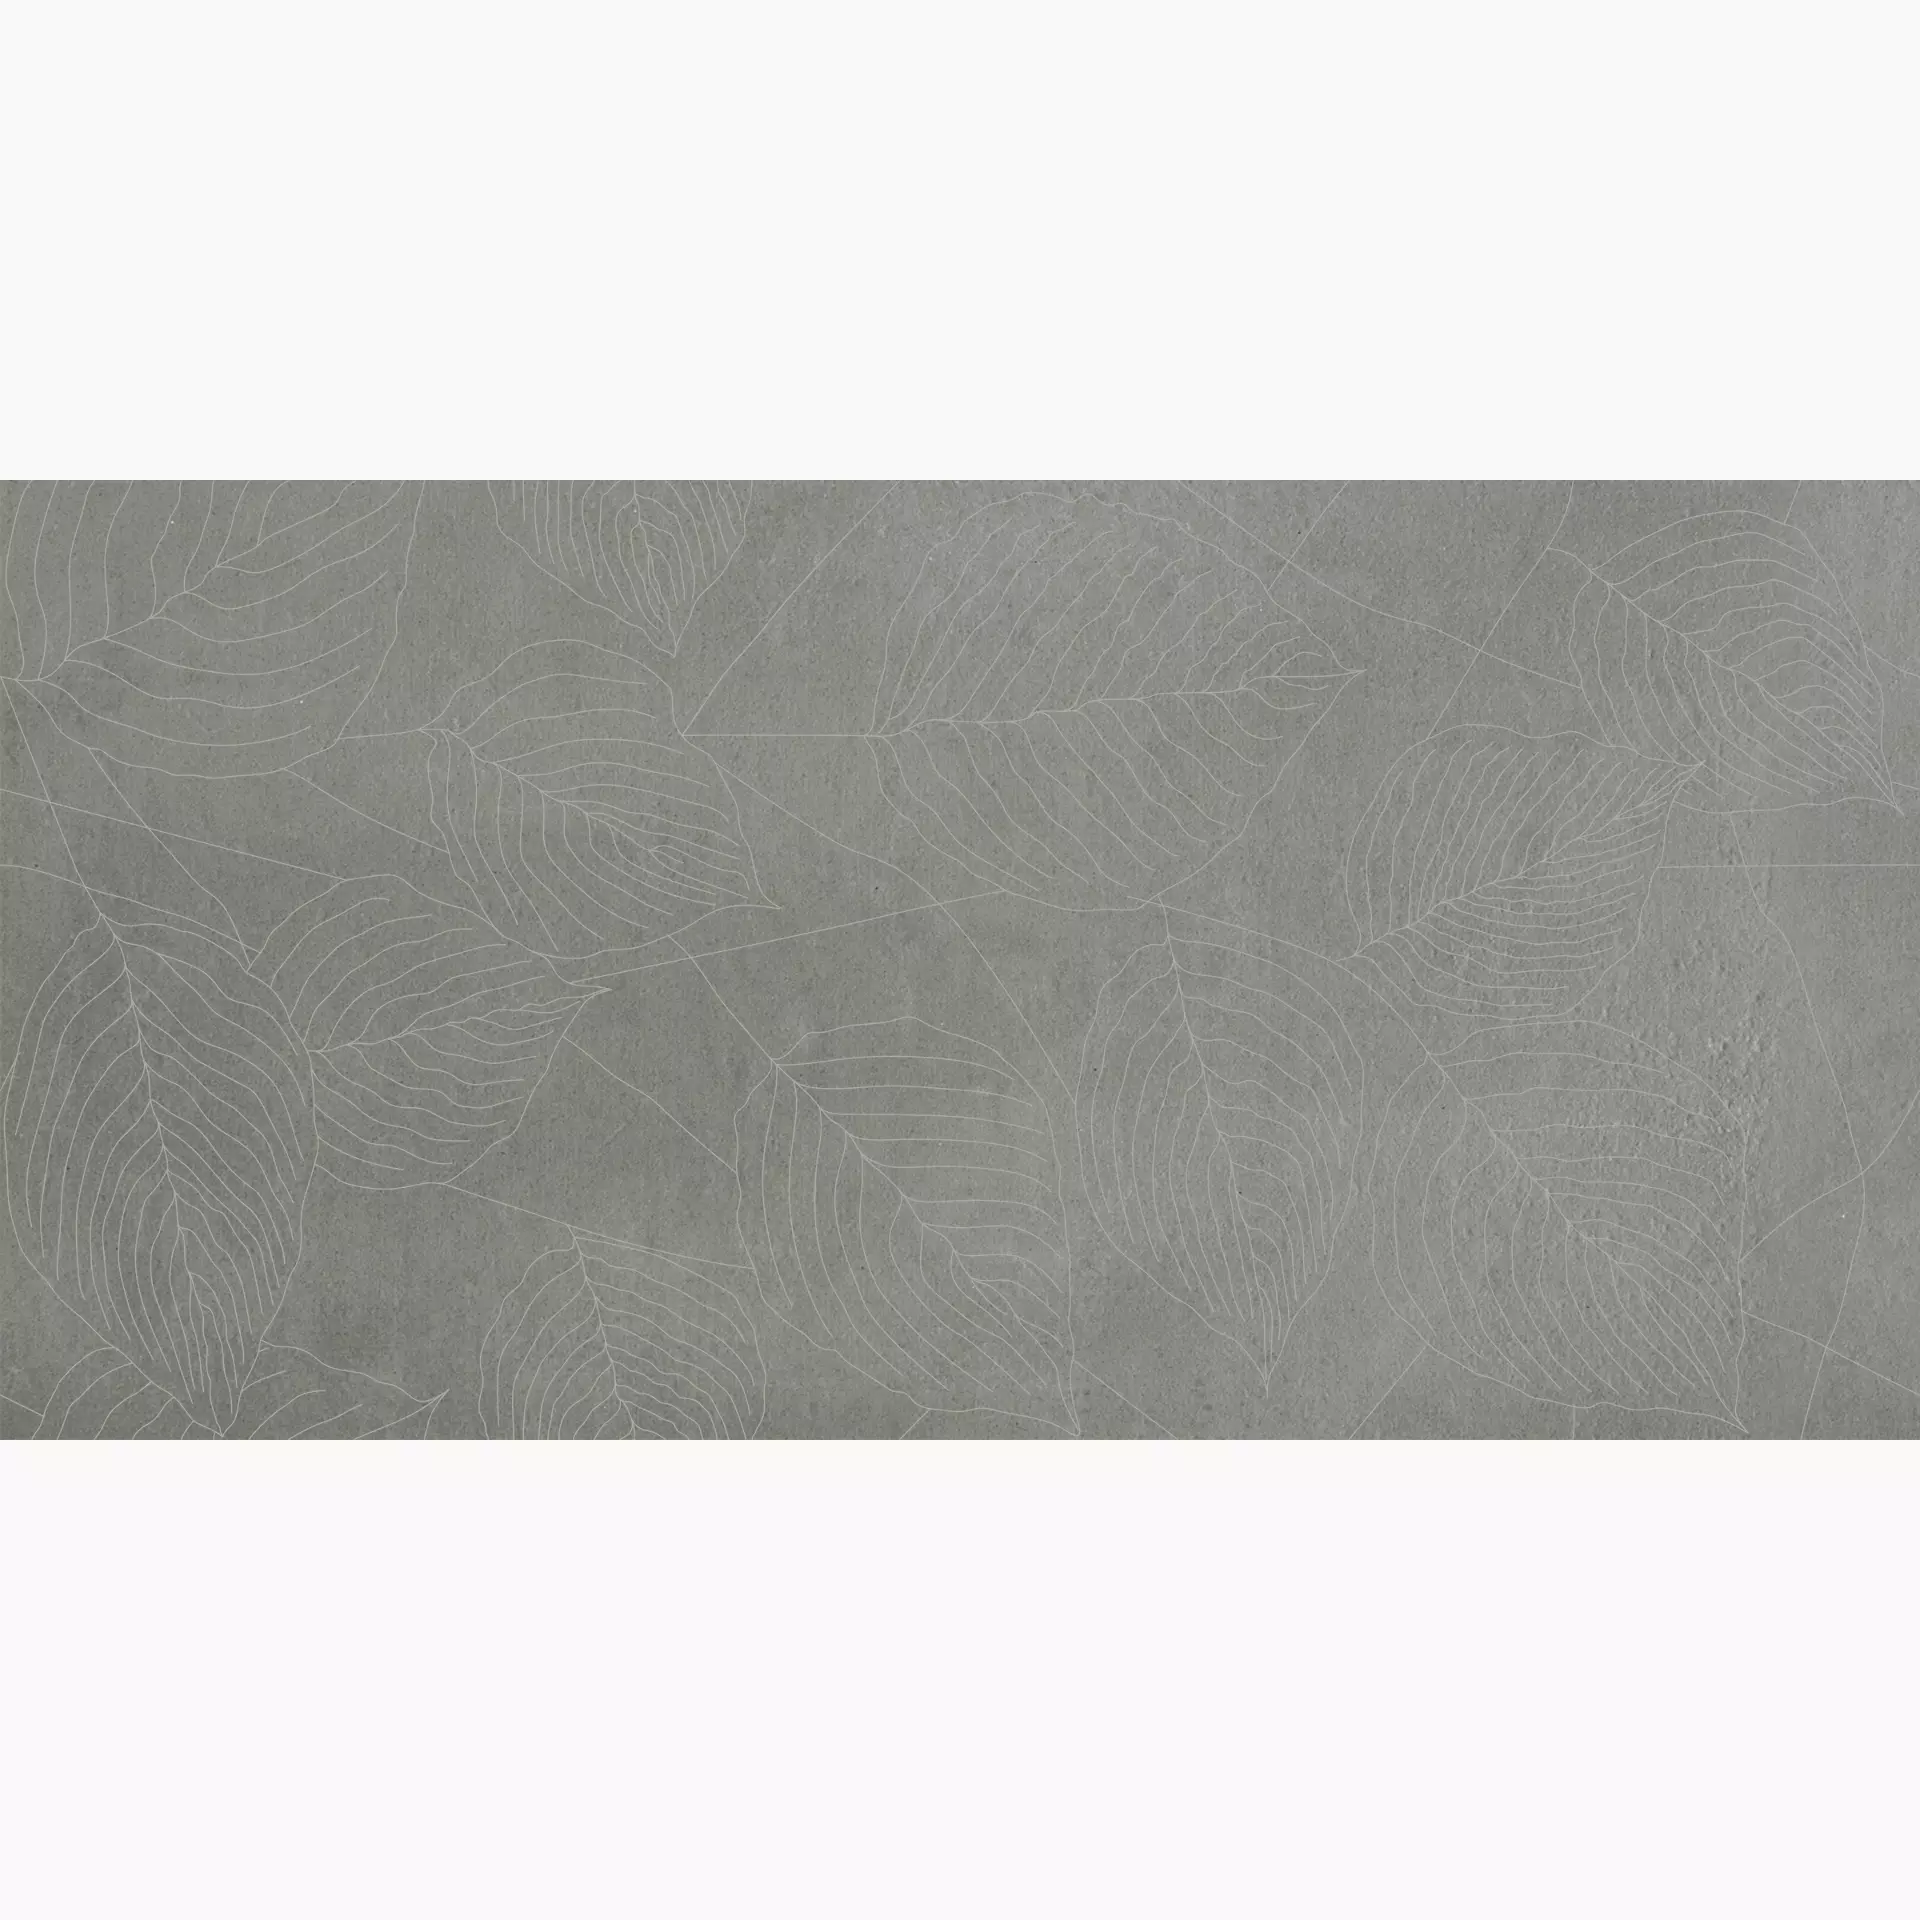 Gigacer Concrete Signs Grey Matt Grey 4.8CONC60120GRELEAV matt 60x120cm Leaves 4,8mm